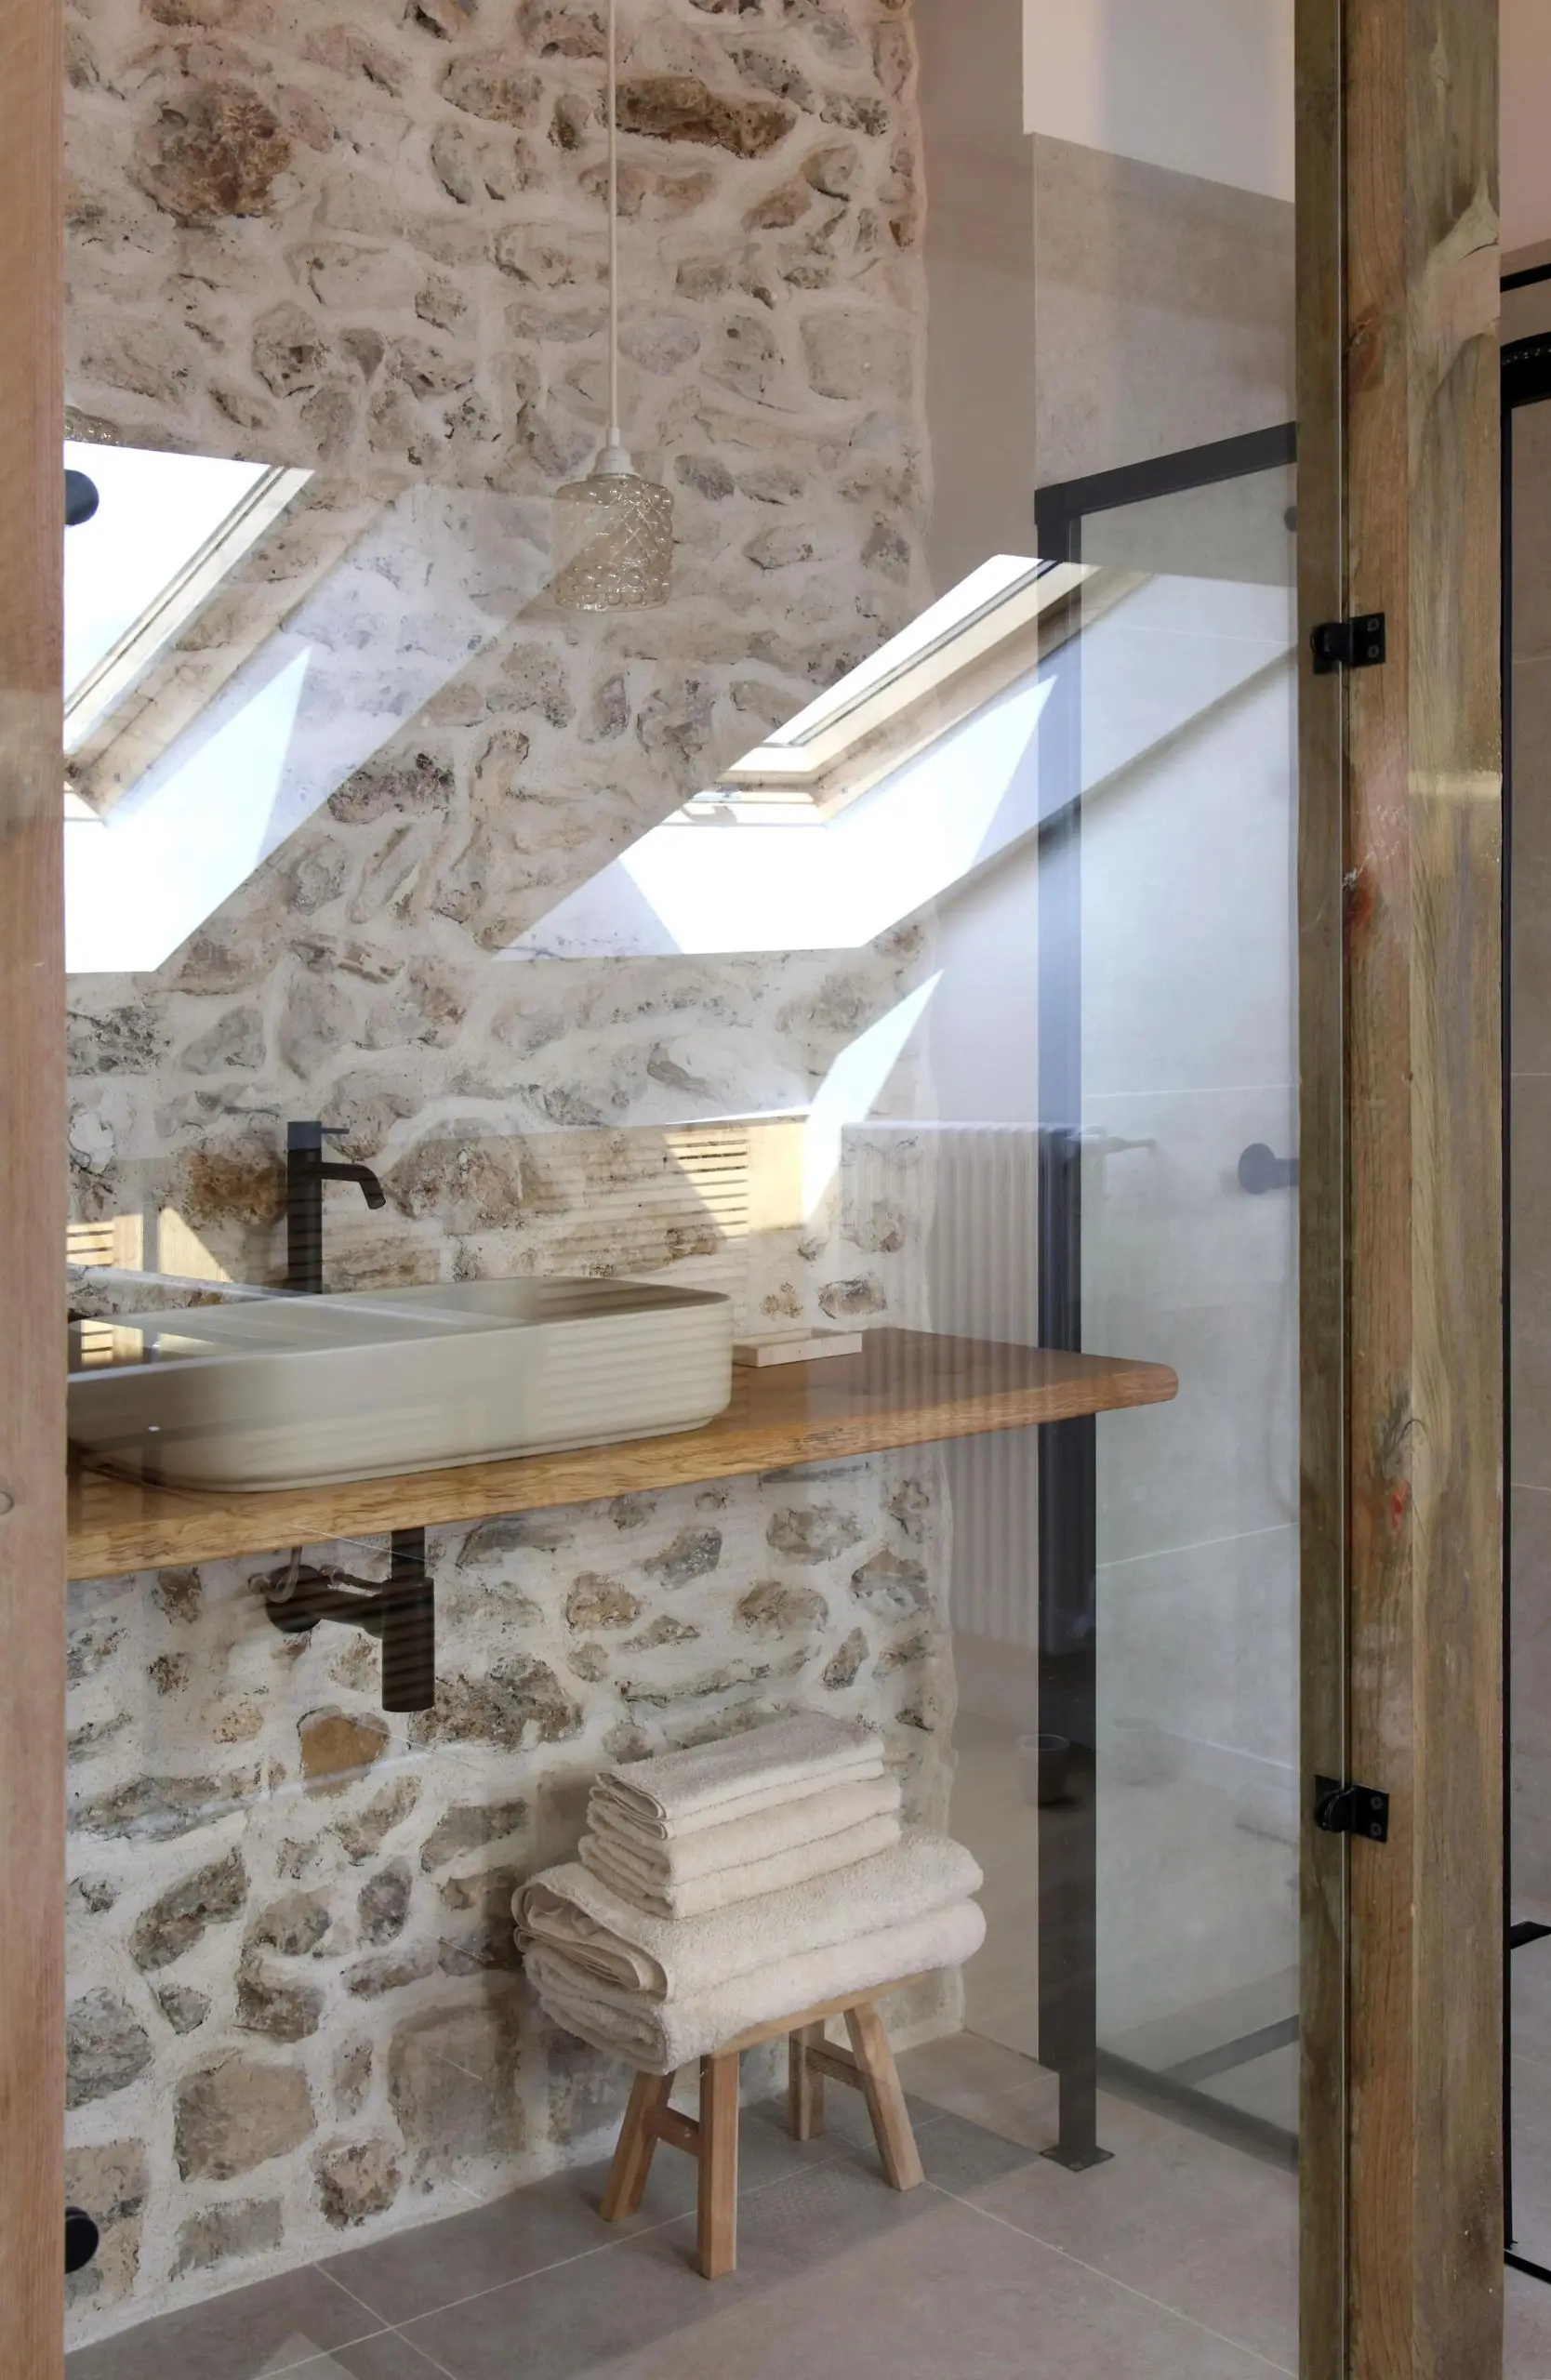 salle de bain vitrée - salle de bain pierre bois - vasque cielo